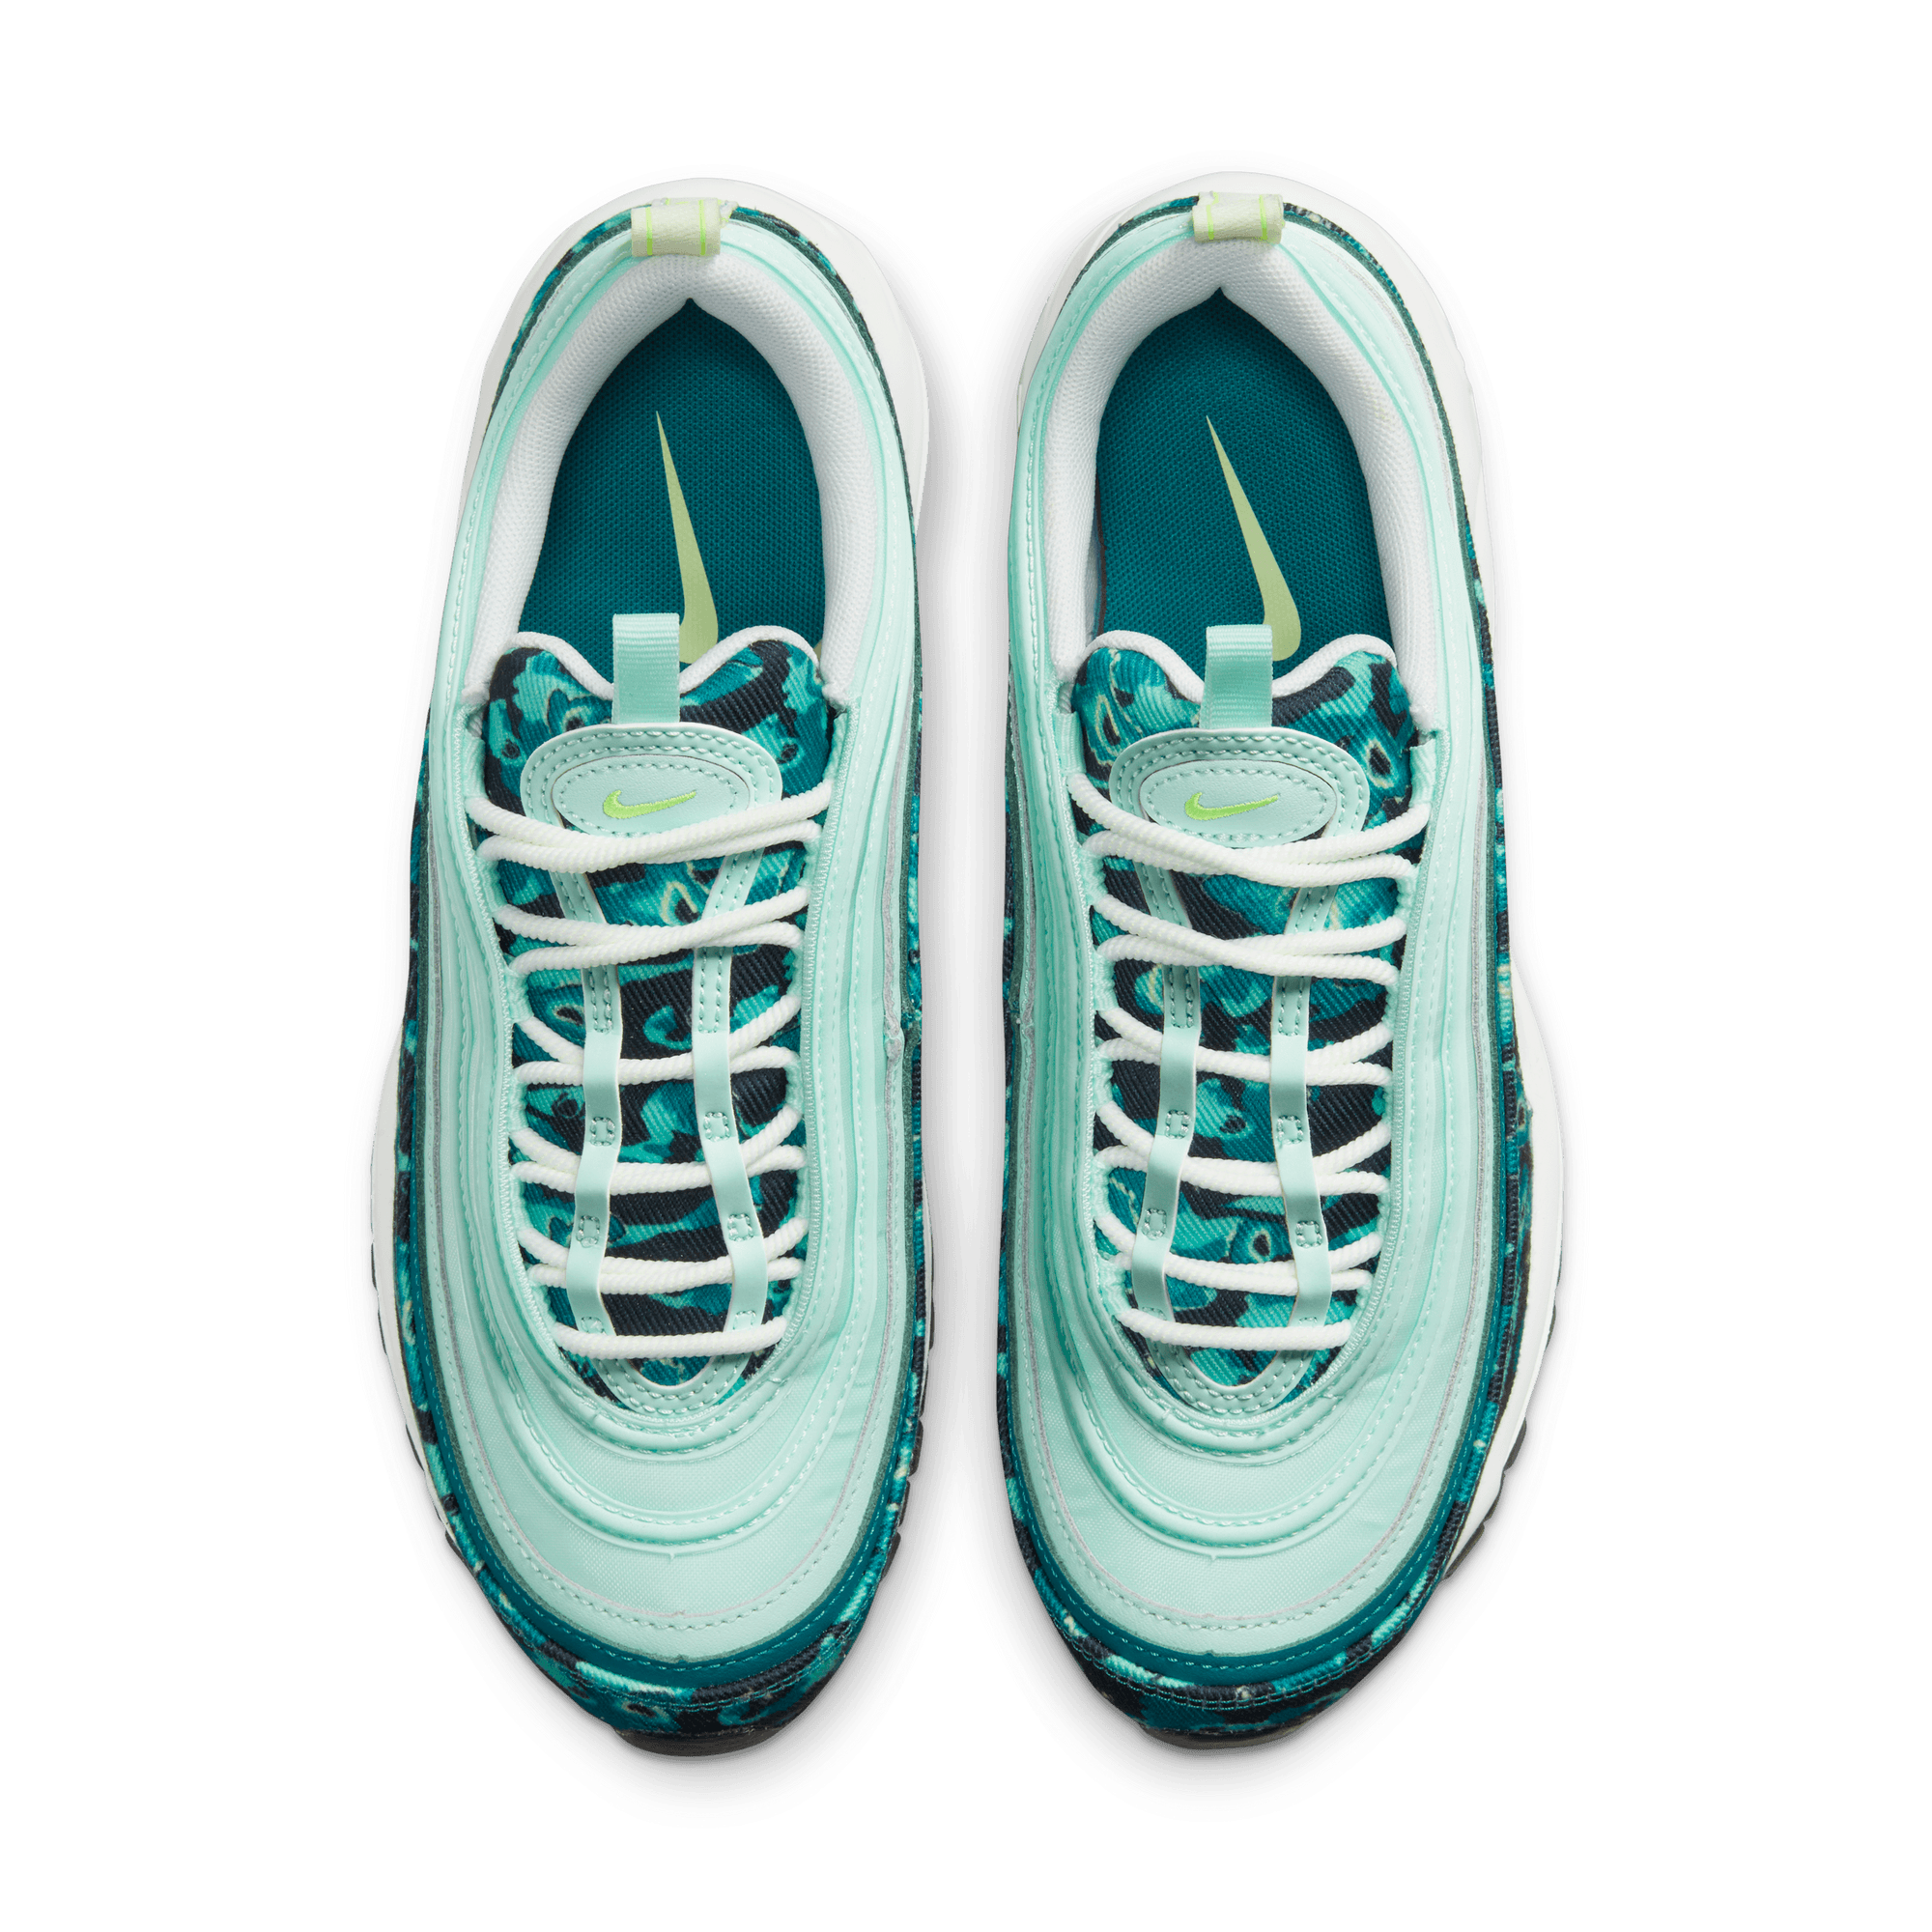 Lach affix Vooruitzien Nike Air Max 97 Green Camo - Women's - GBNY